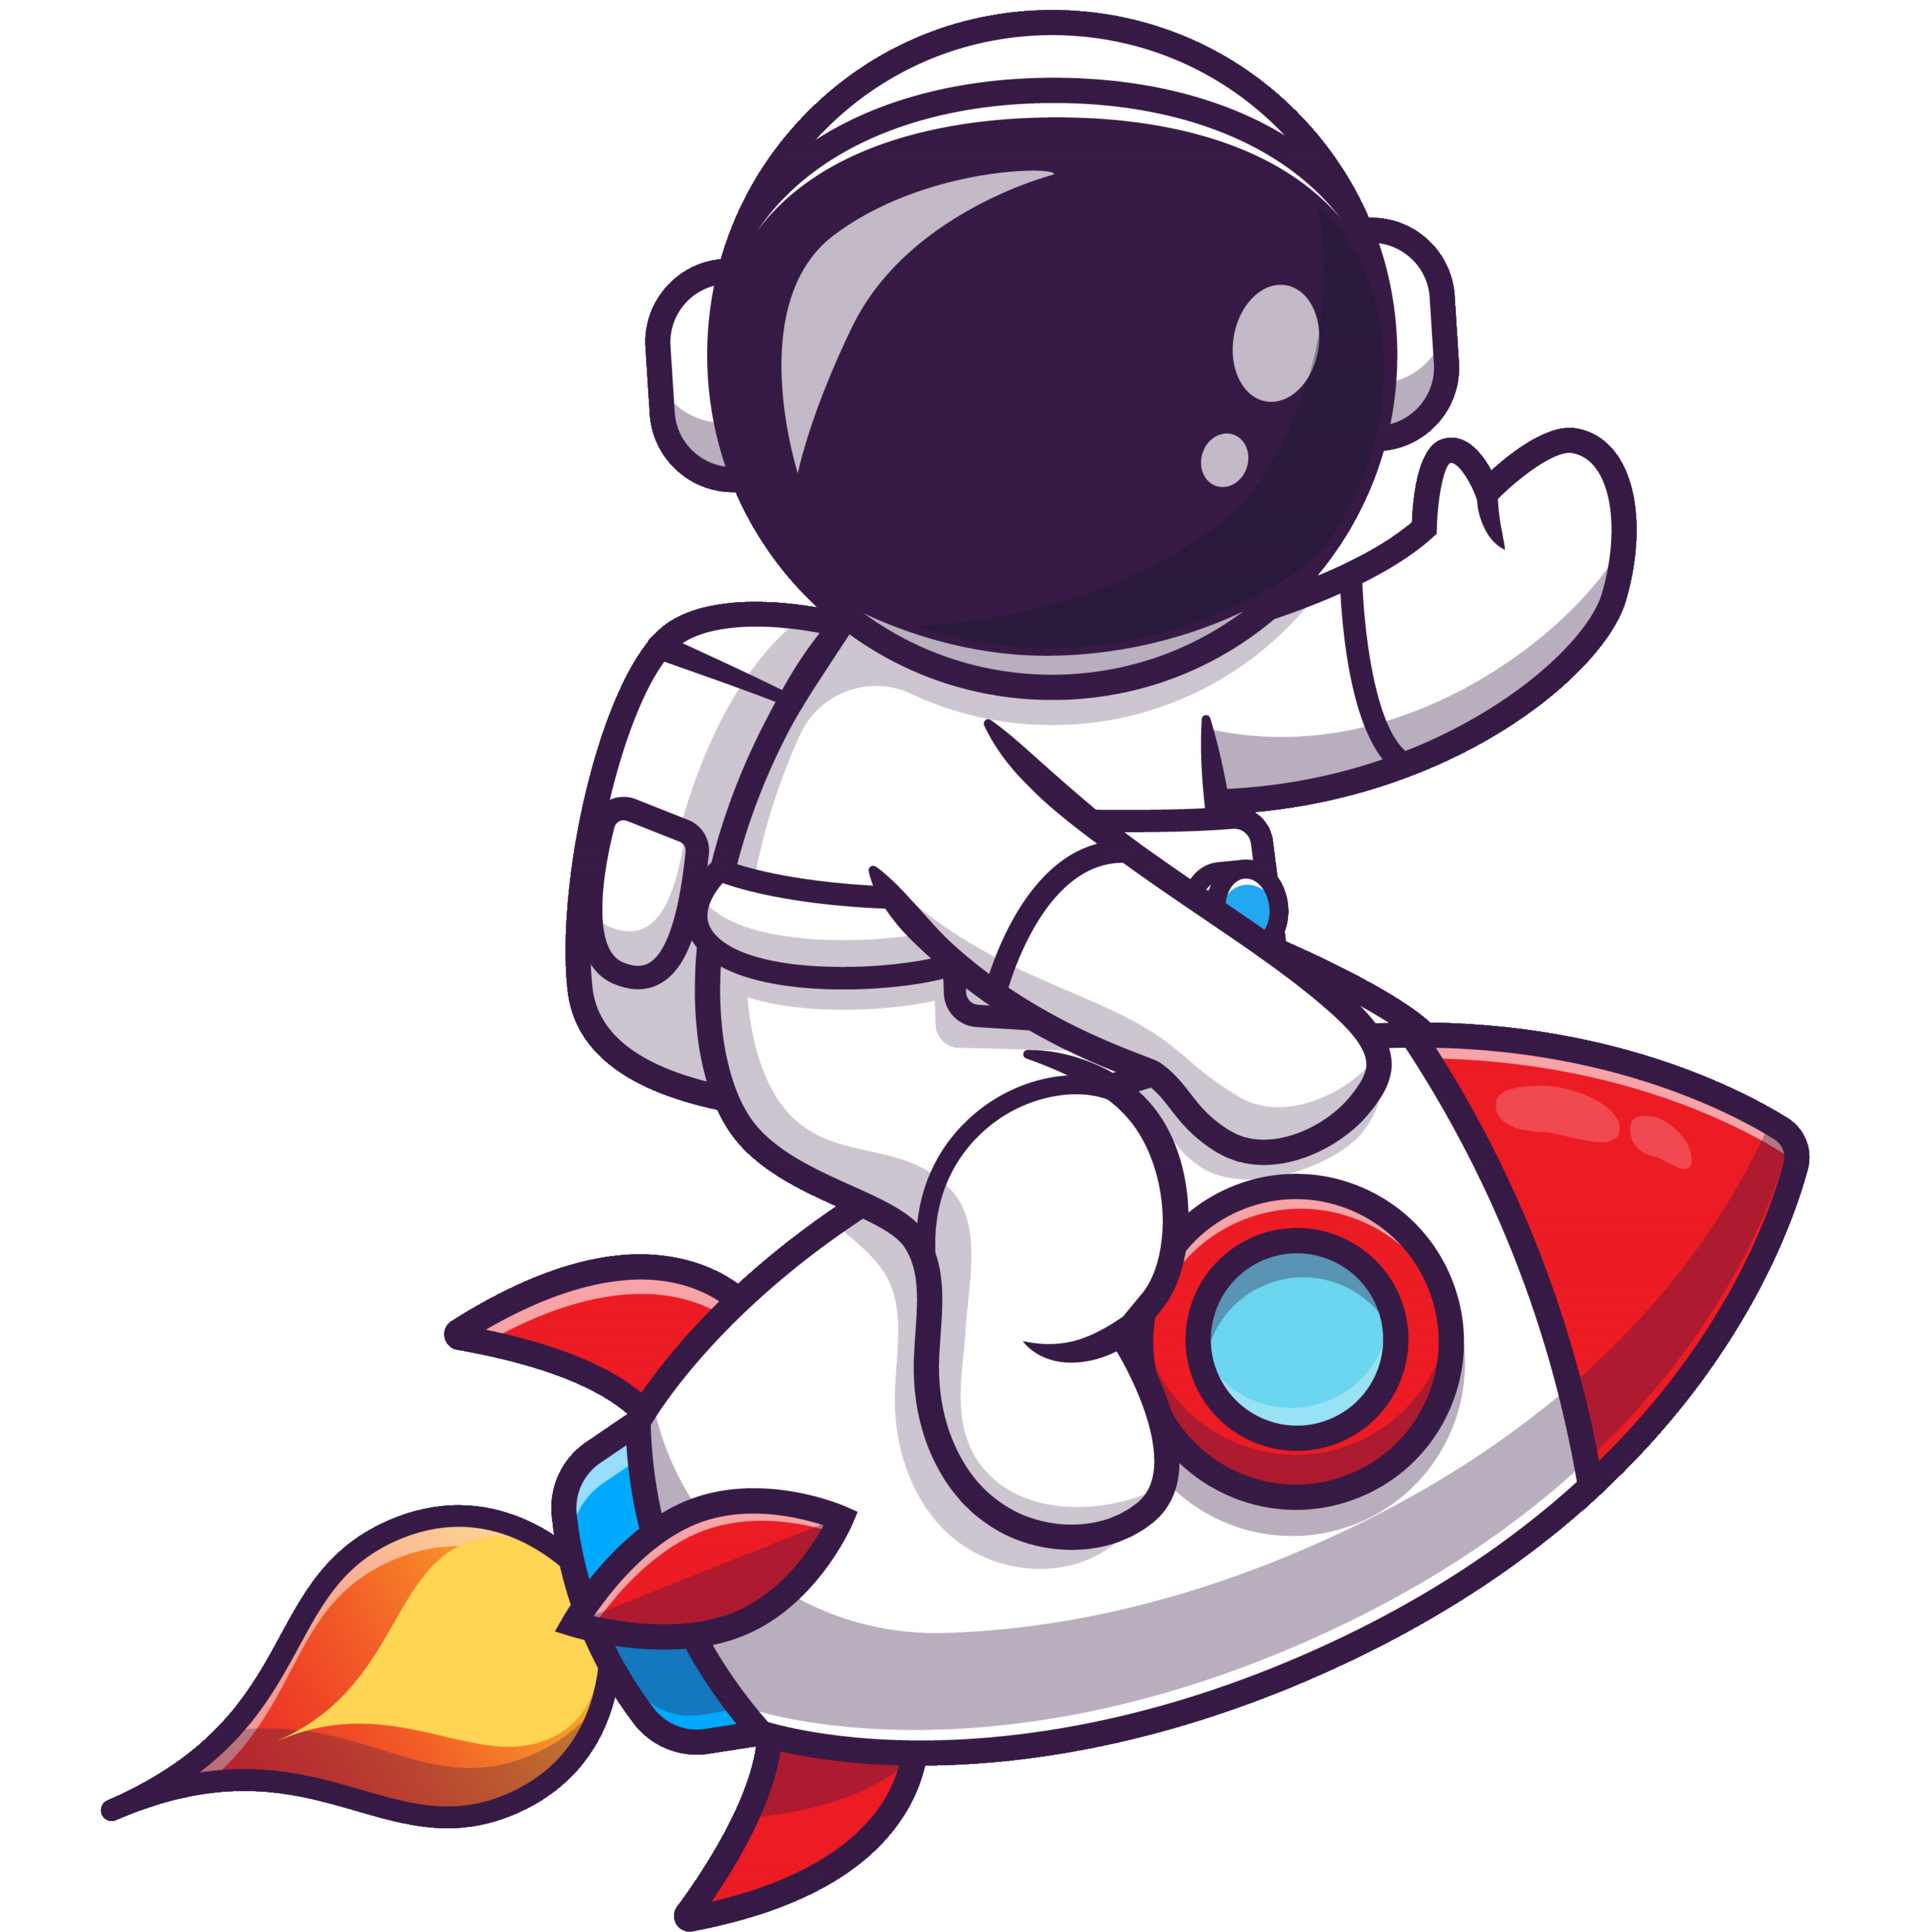 Astronaut on a rocket